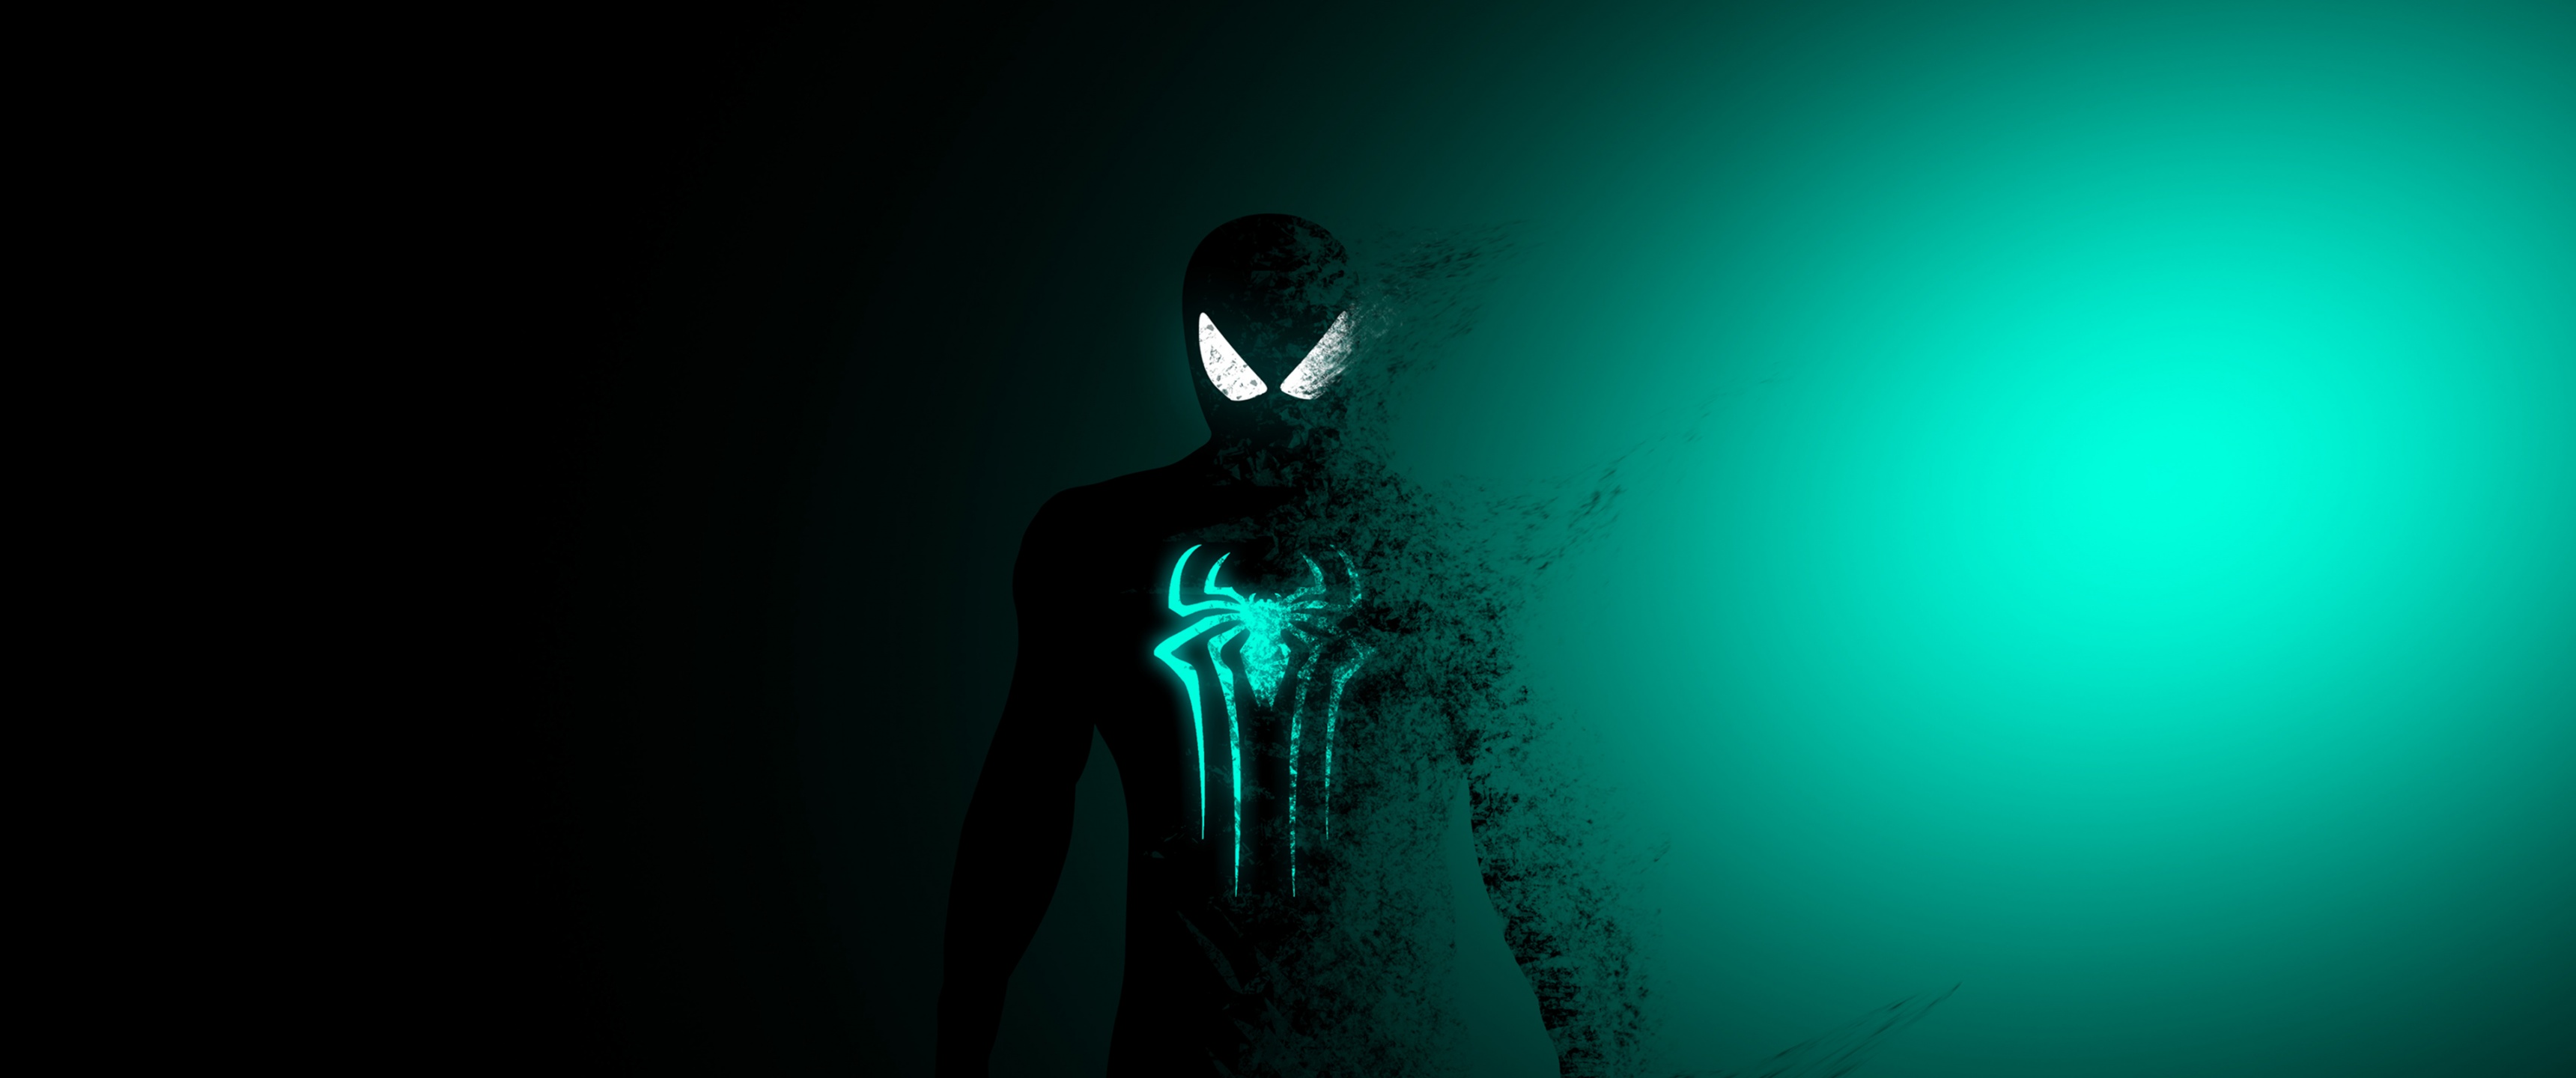 Spider-Man Wallpaper 4K, Dark, Cyan, Minimal, Graphics CGI, #170